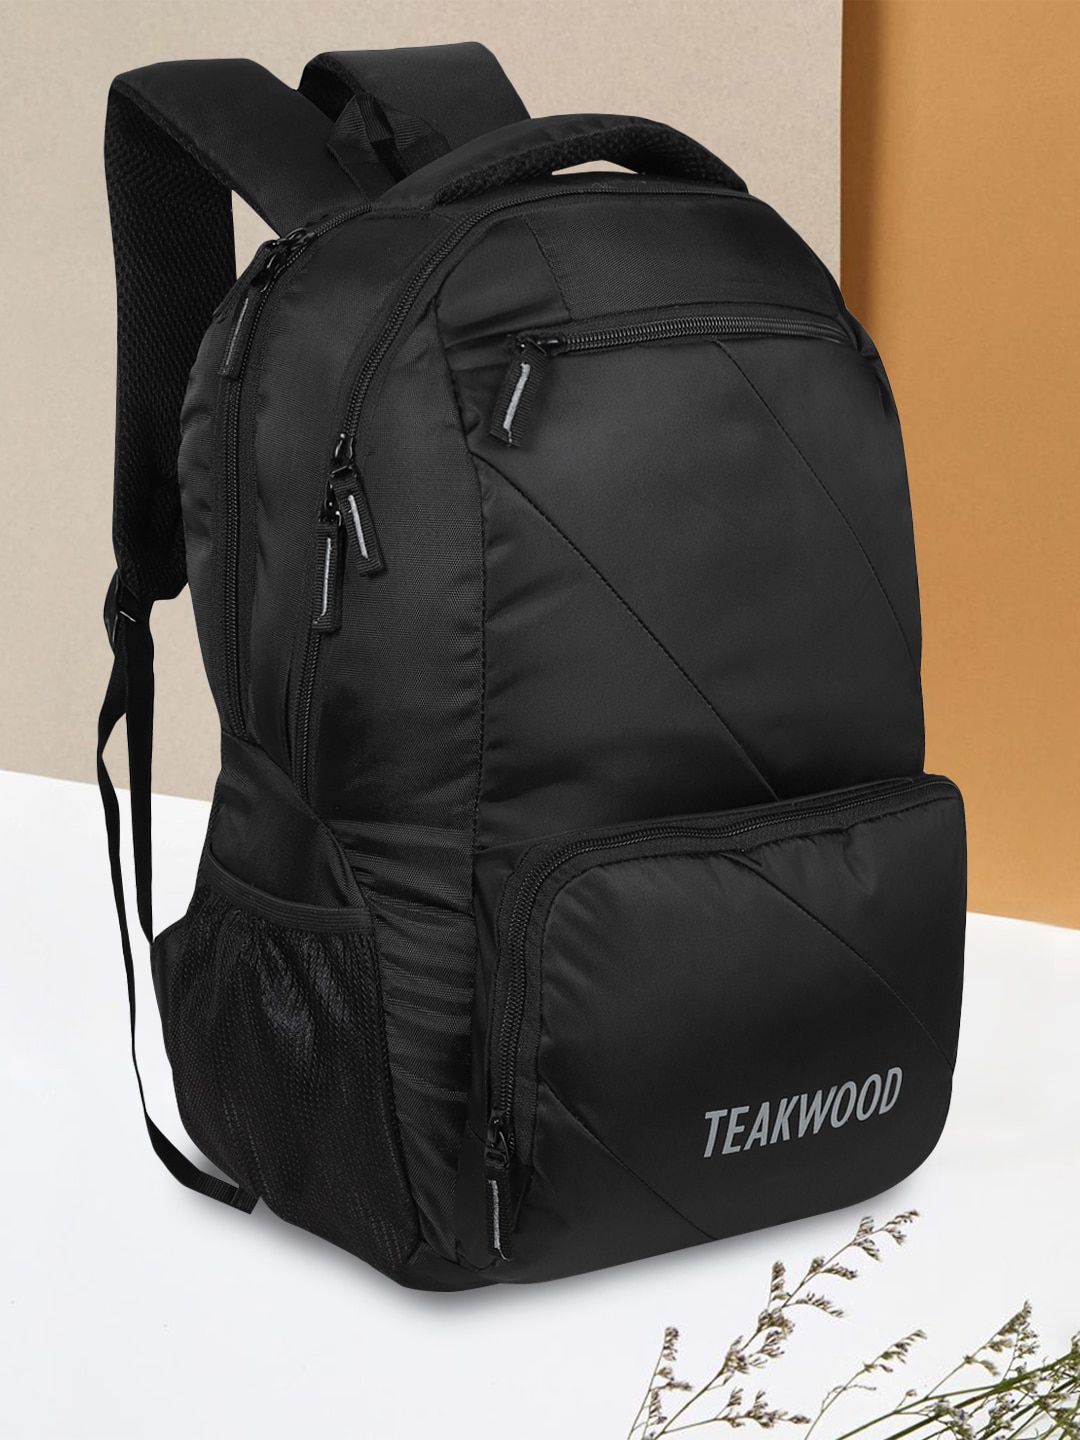 Teakwood Leathers Unisex Black Backpacks Price in India